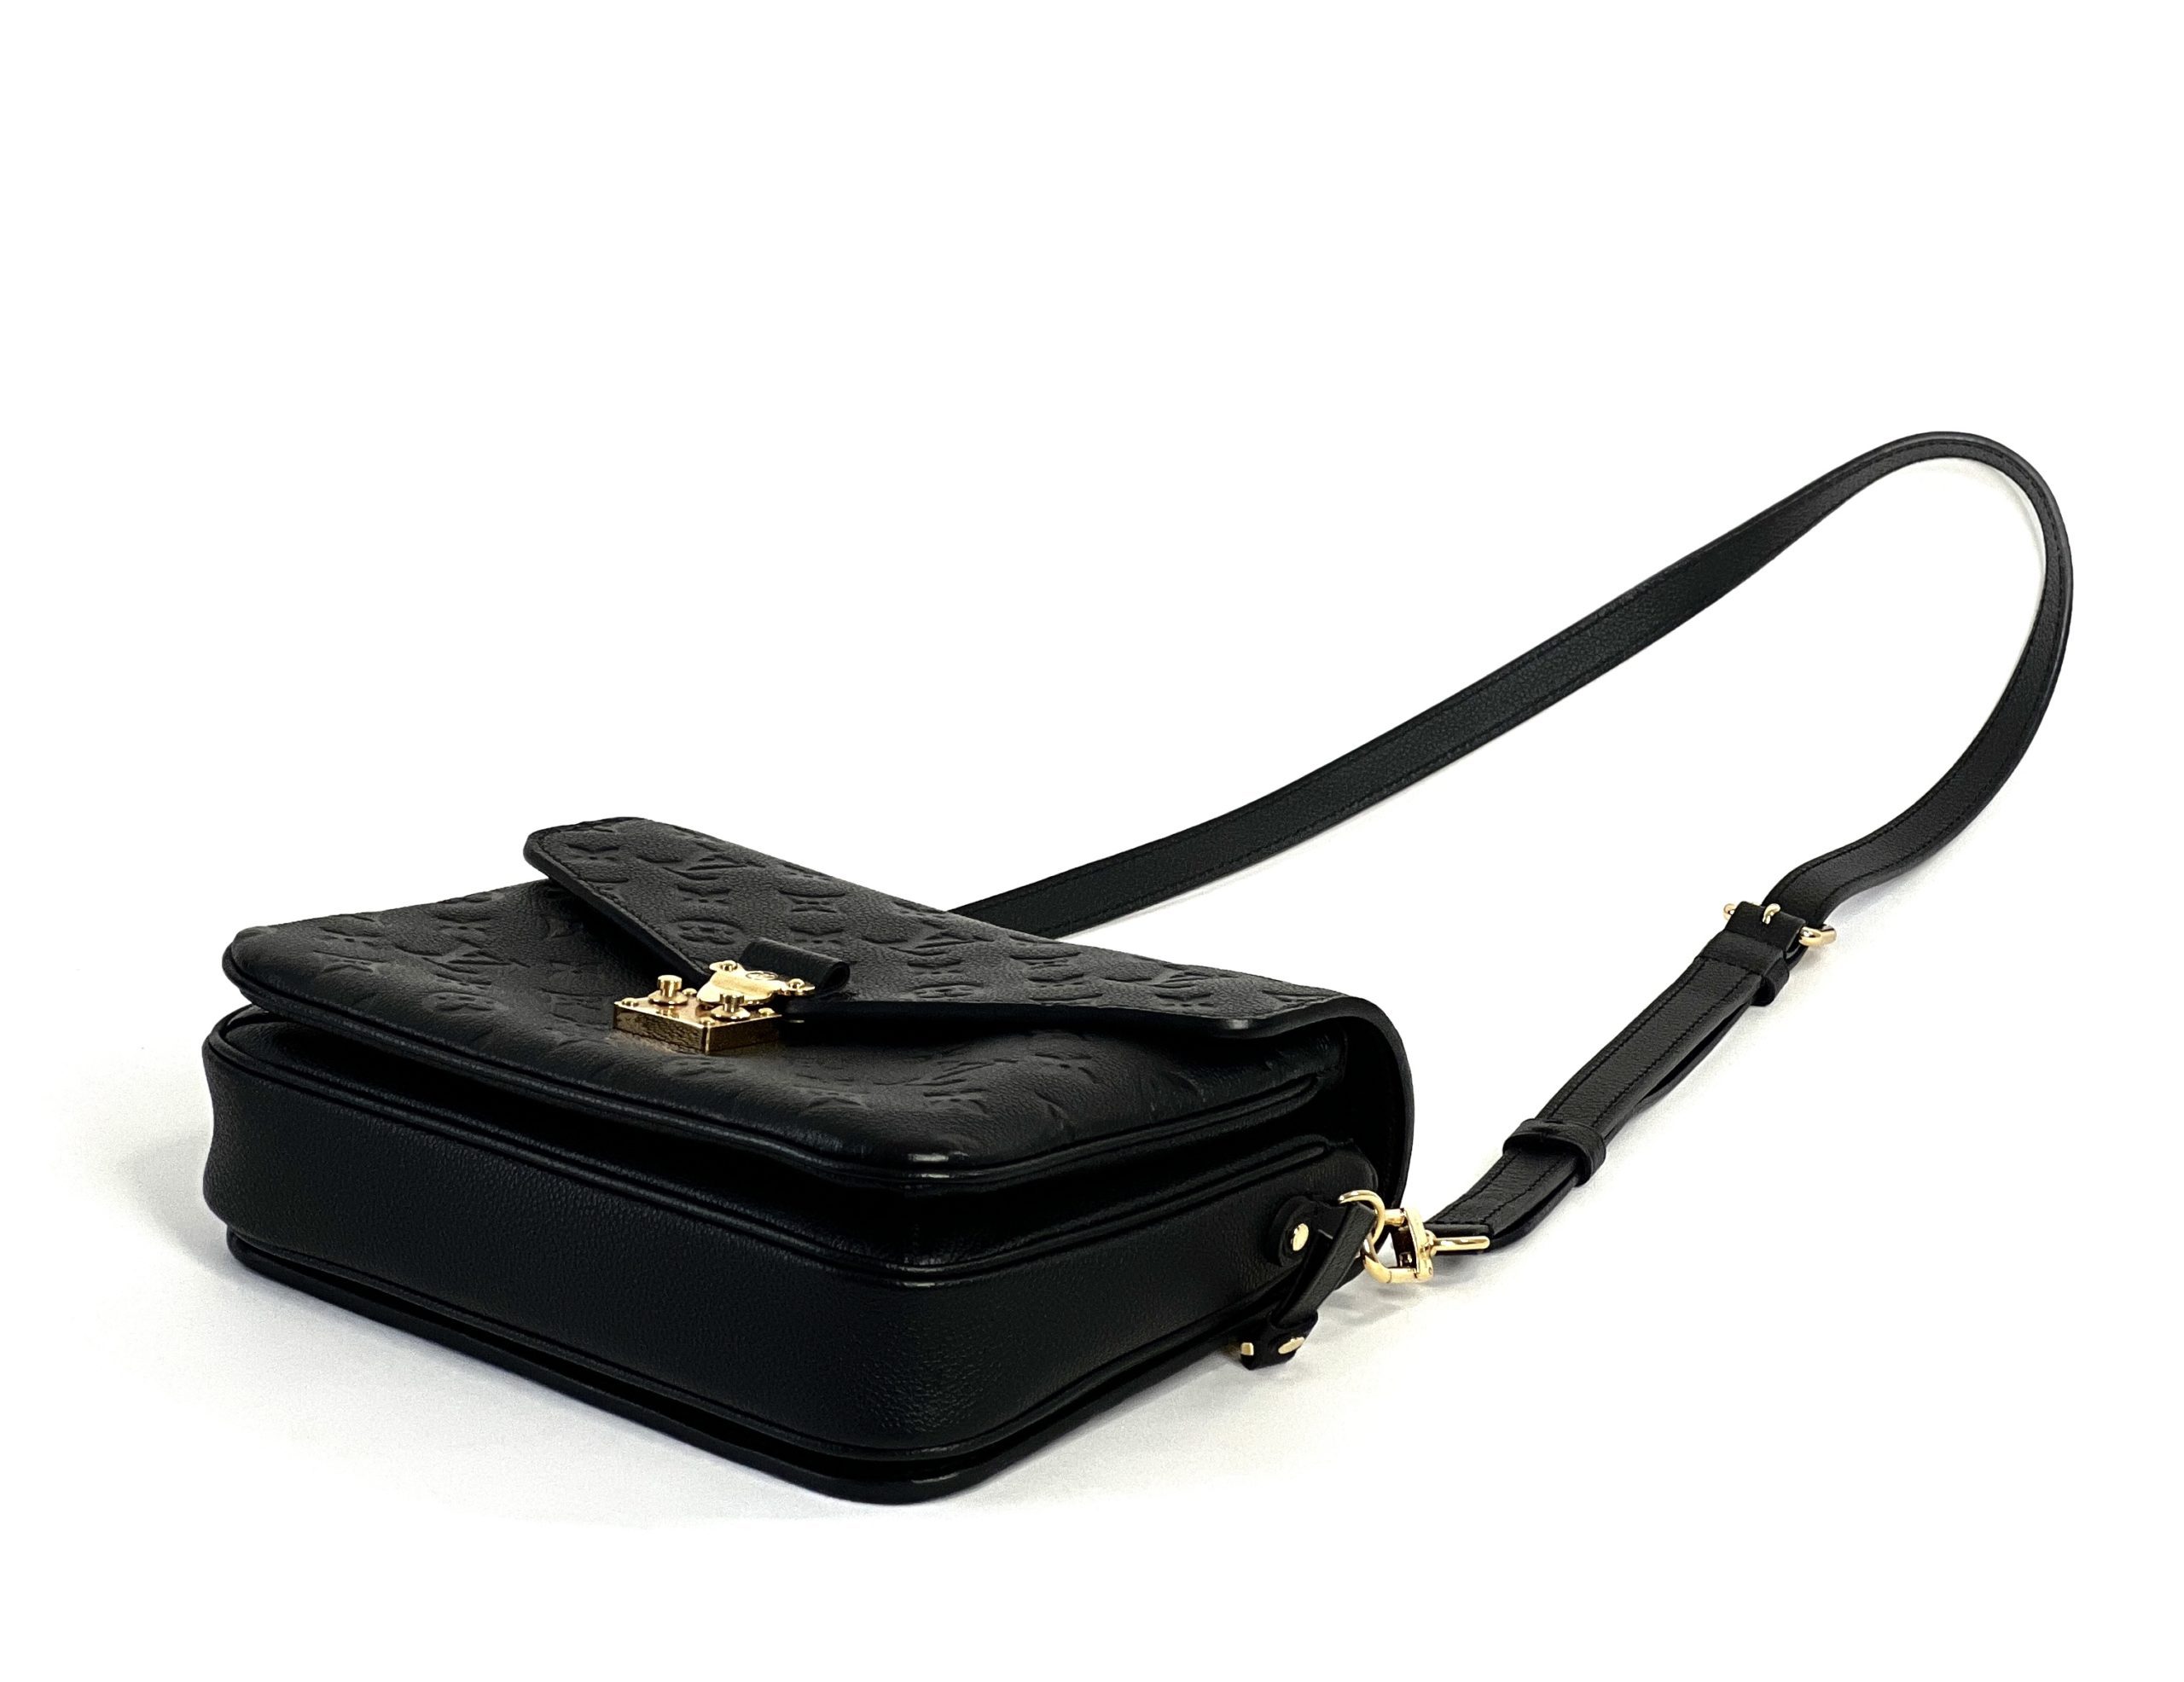 Metis leather handbag Louis Vuitton Brown in Leather - 27880026